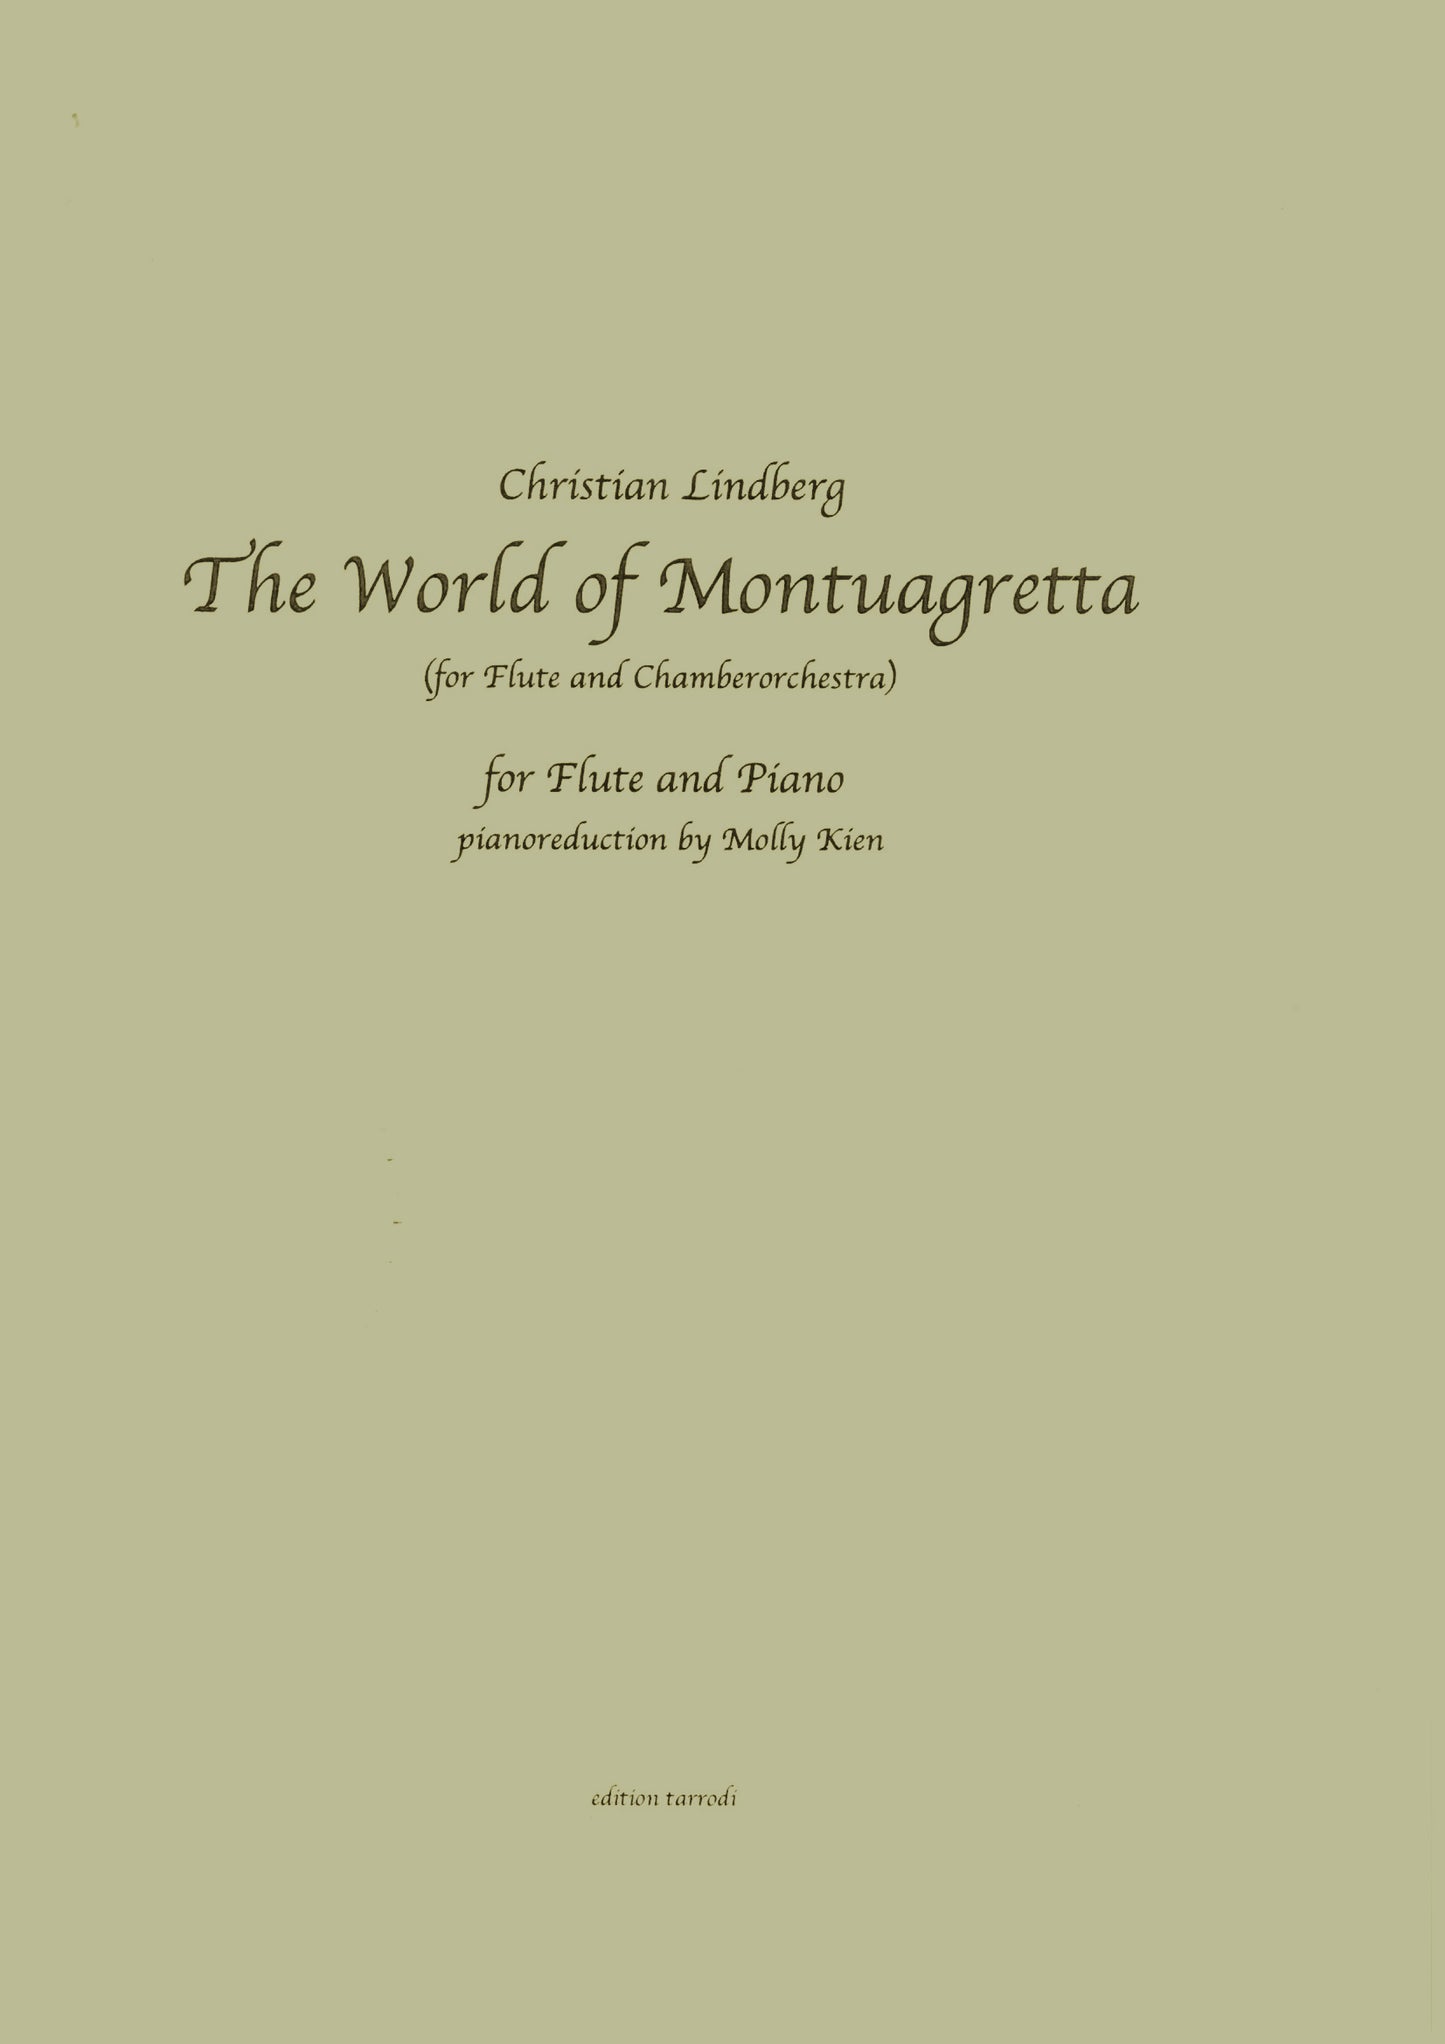 Christian Lindberg - The World of Montuagretta Flute & Piano